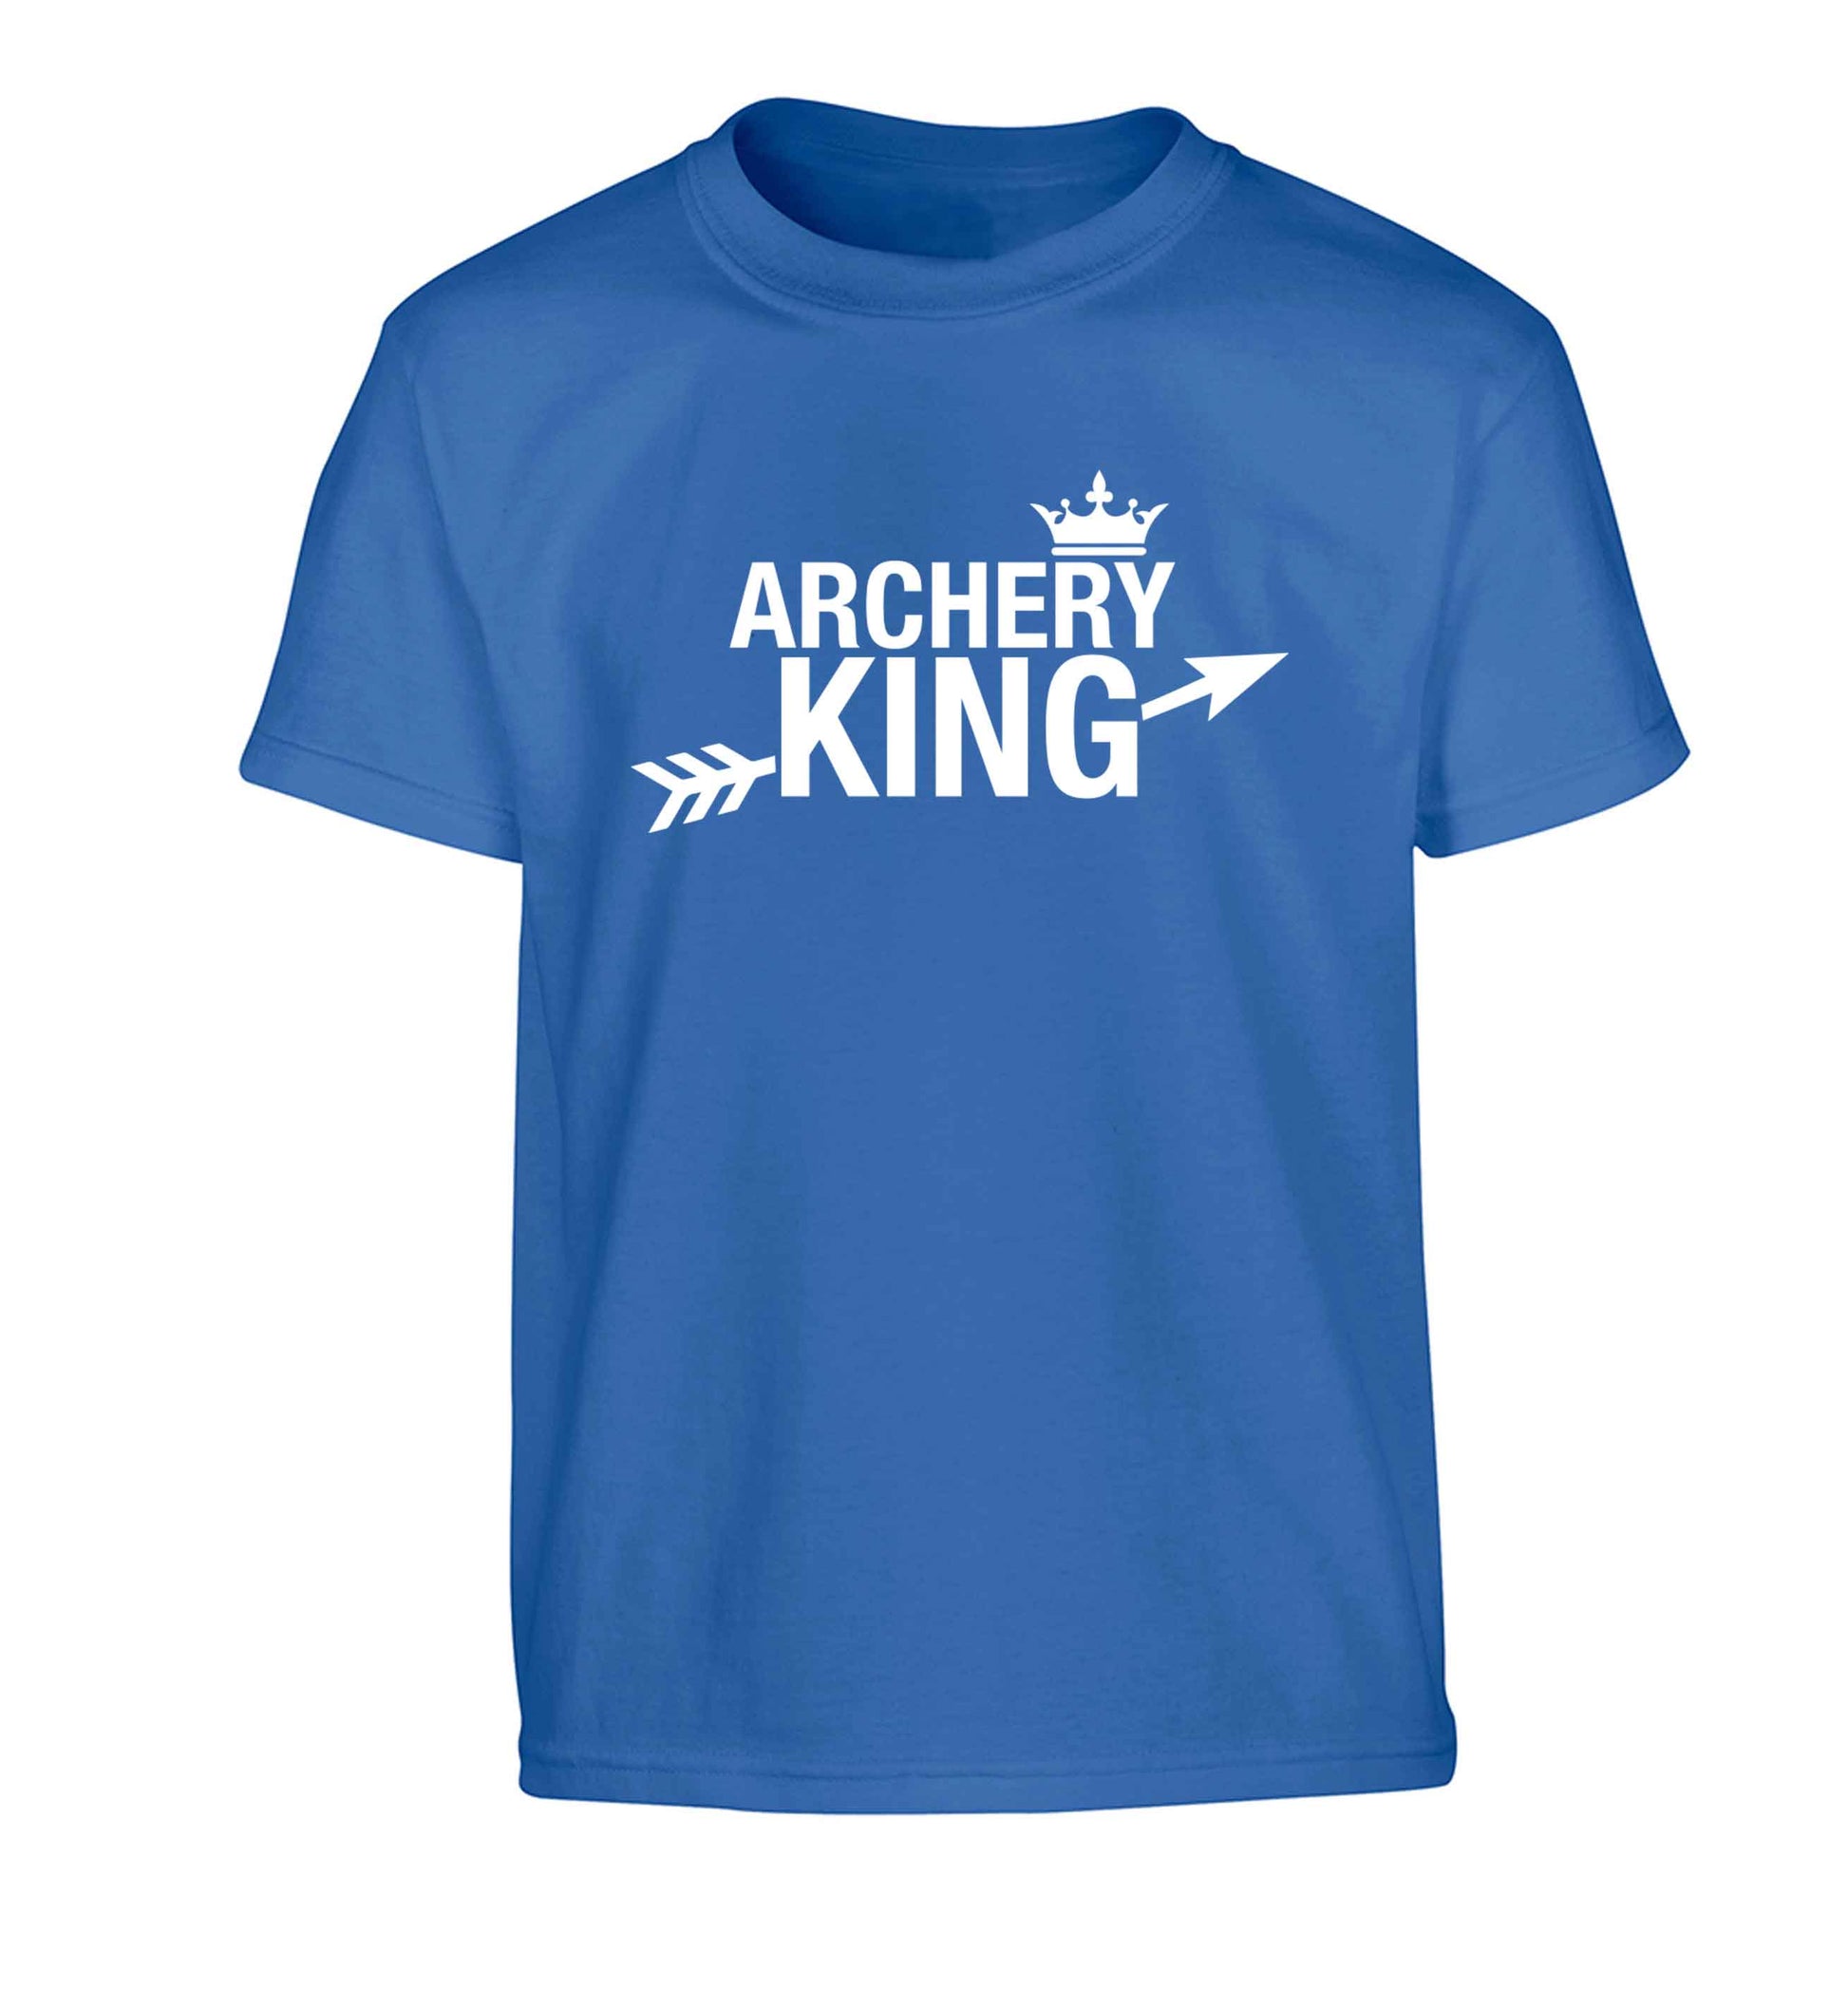 Archery king Children's blue Tshirt 12-13 Years